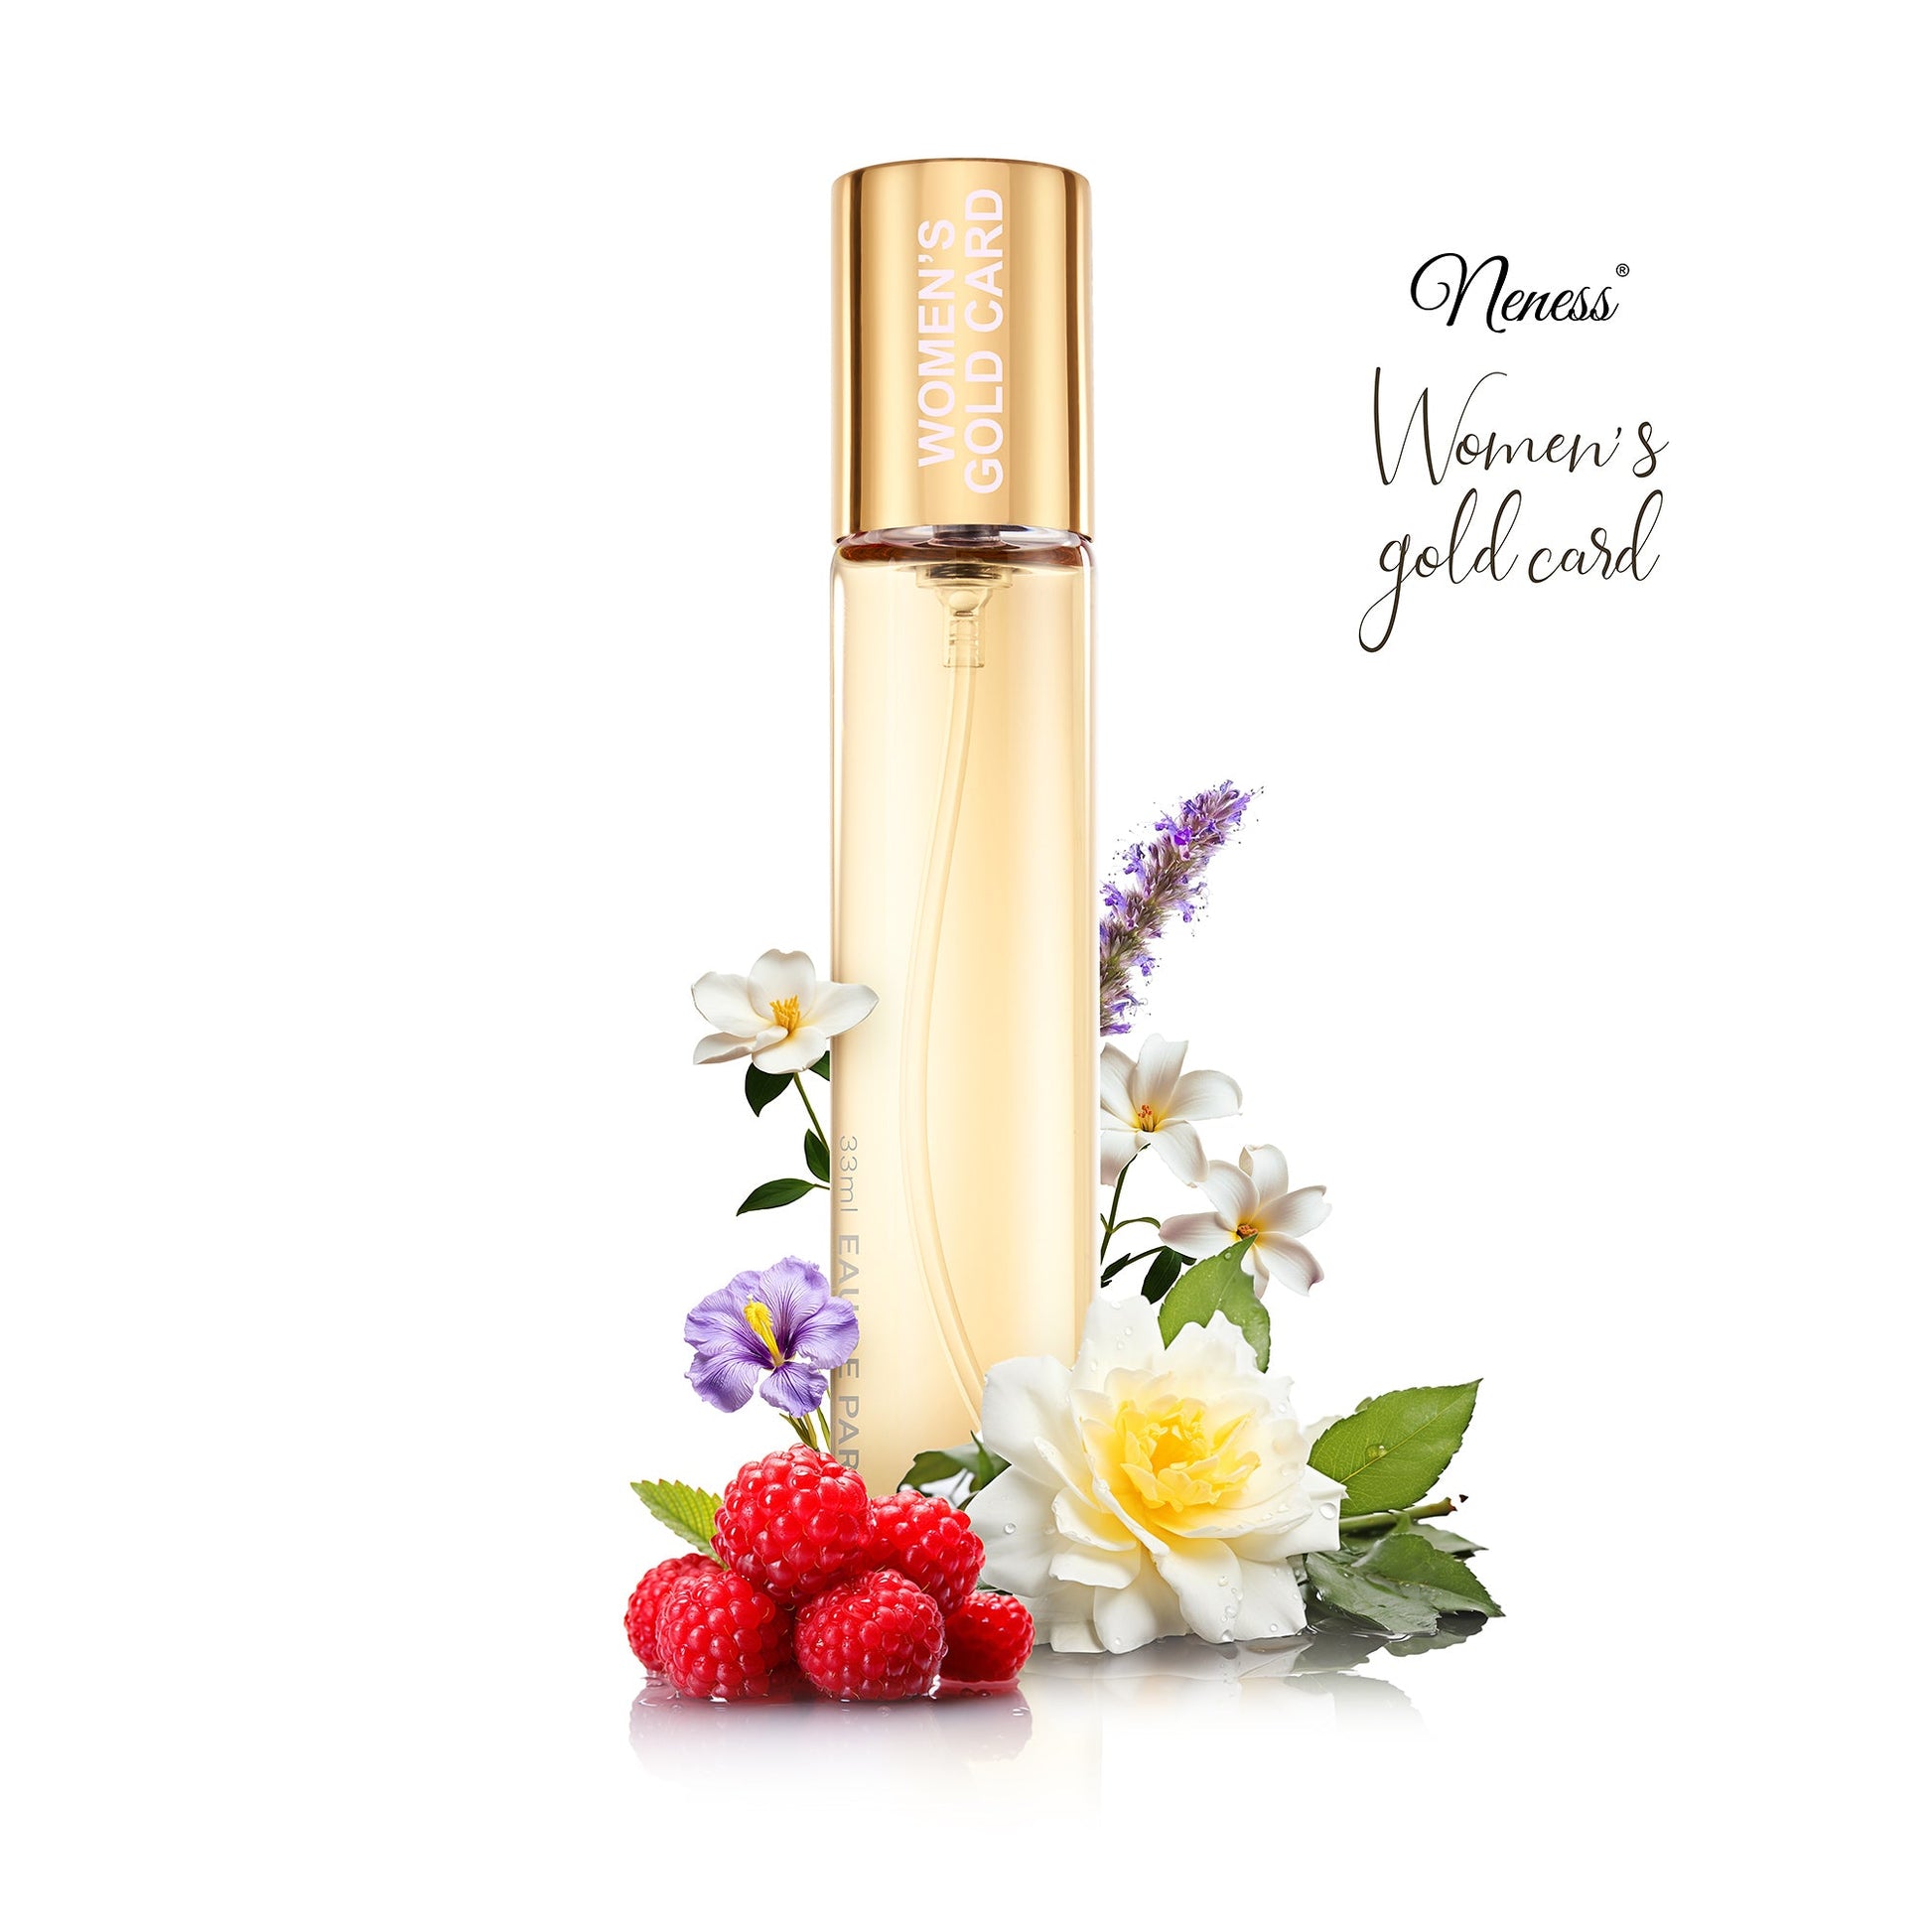 Image of N177. Neness Women's Gold Card - 33 ml - Perfume For Women